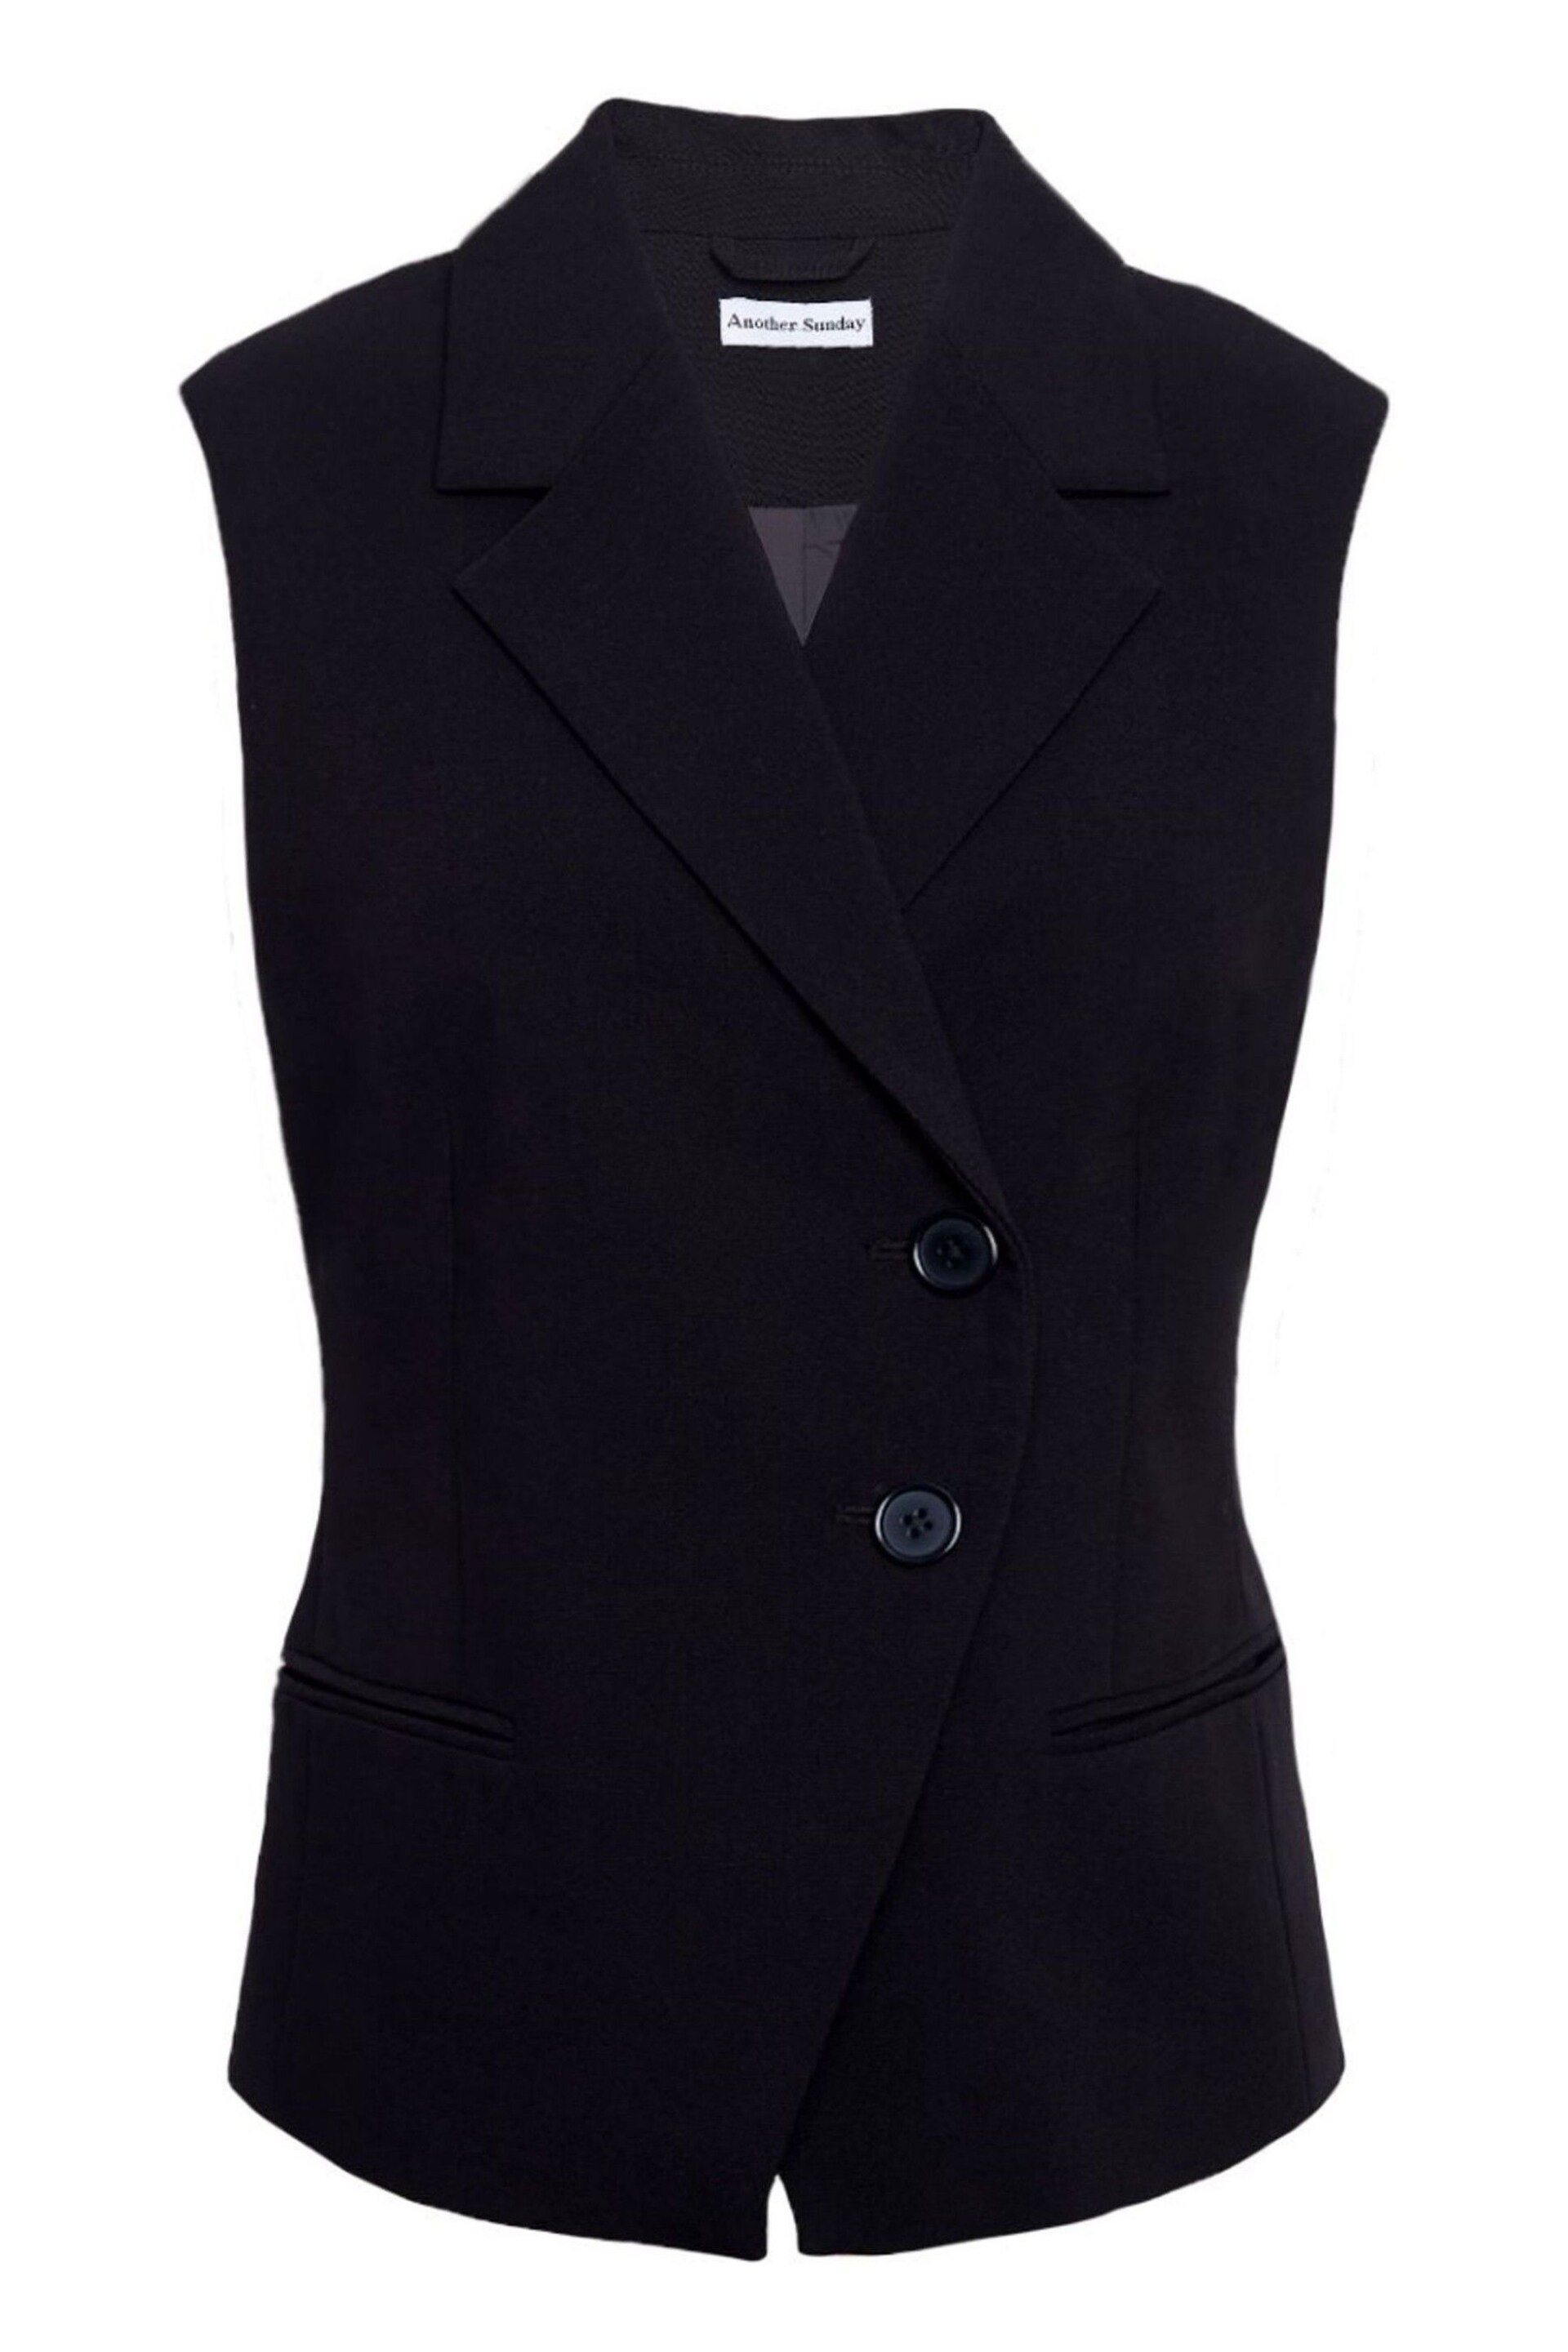 Another Sunday Sleeveless Button Through Black Waistcoat - Image 4 of 5